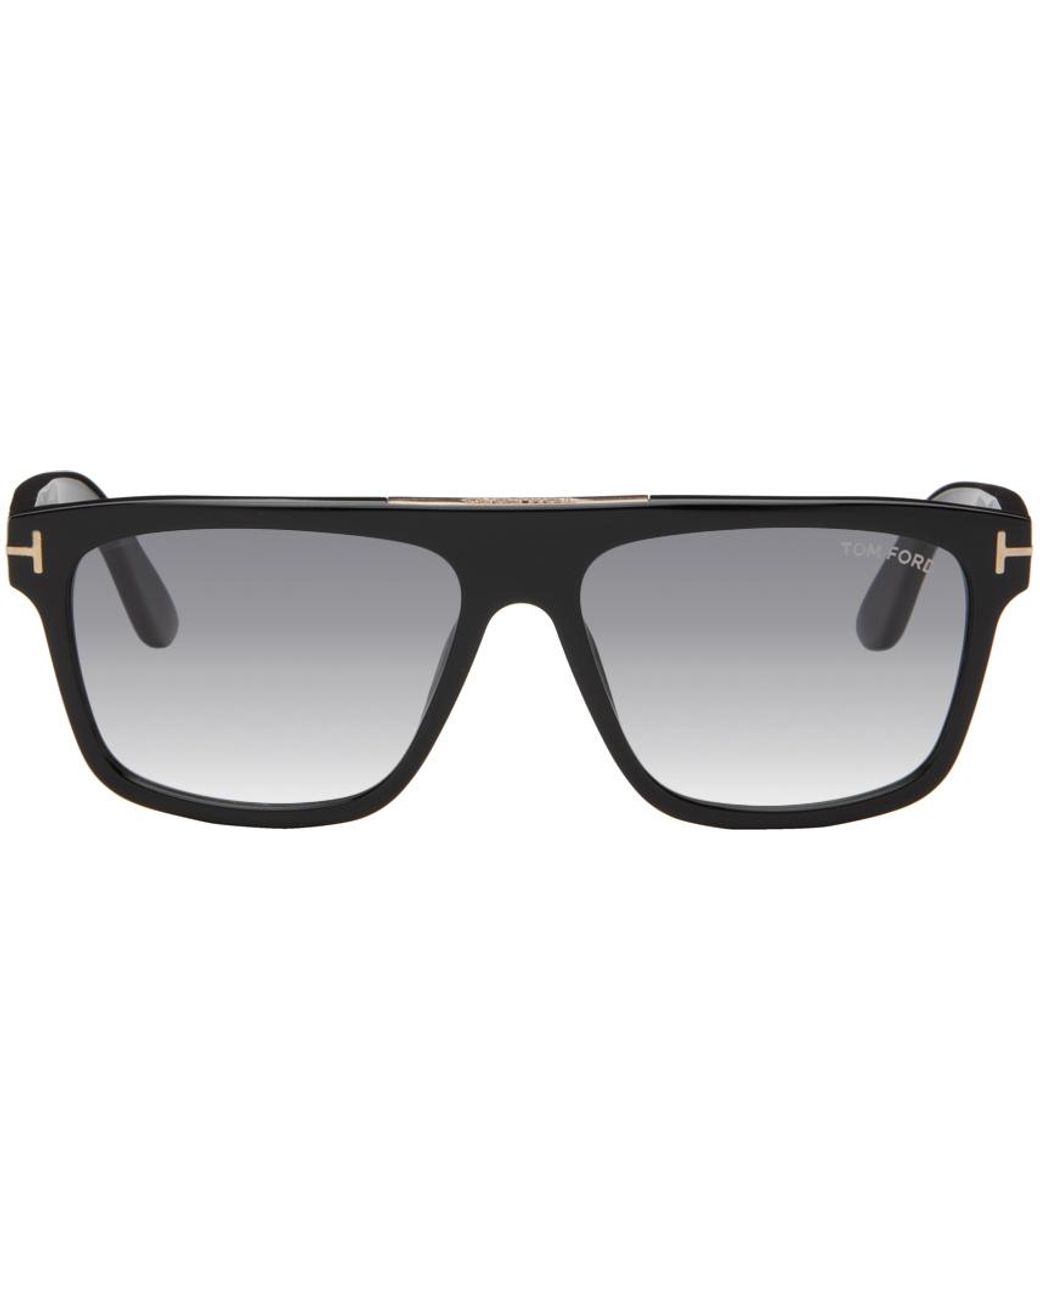 TOM FORD Eyewear brown Cecilio tortoiseshell square sunglasses | Browns